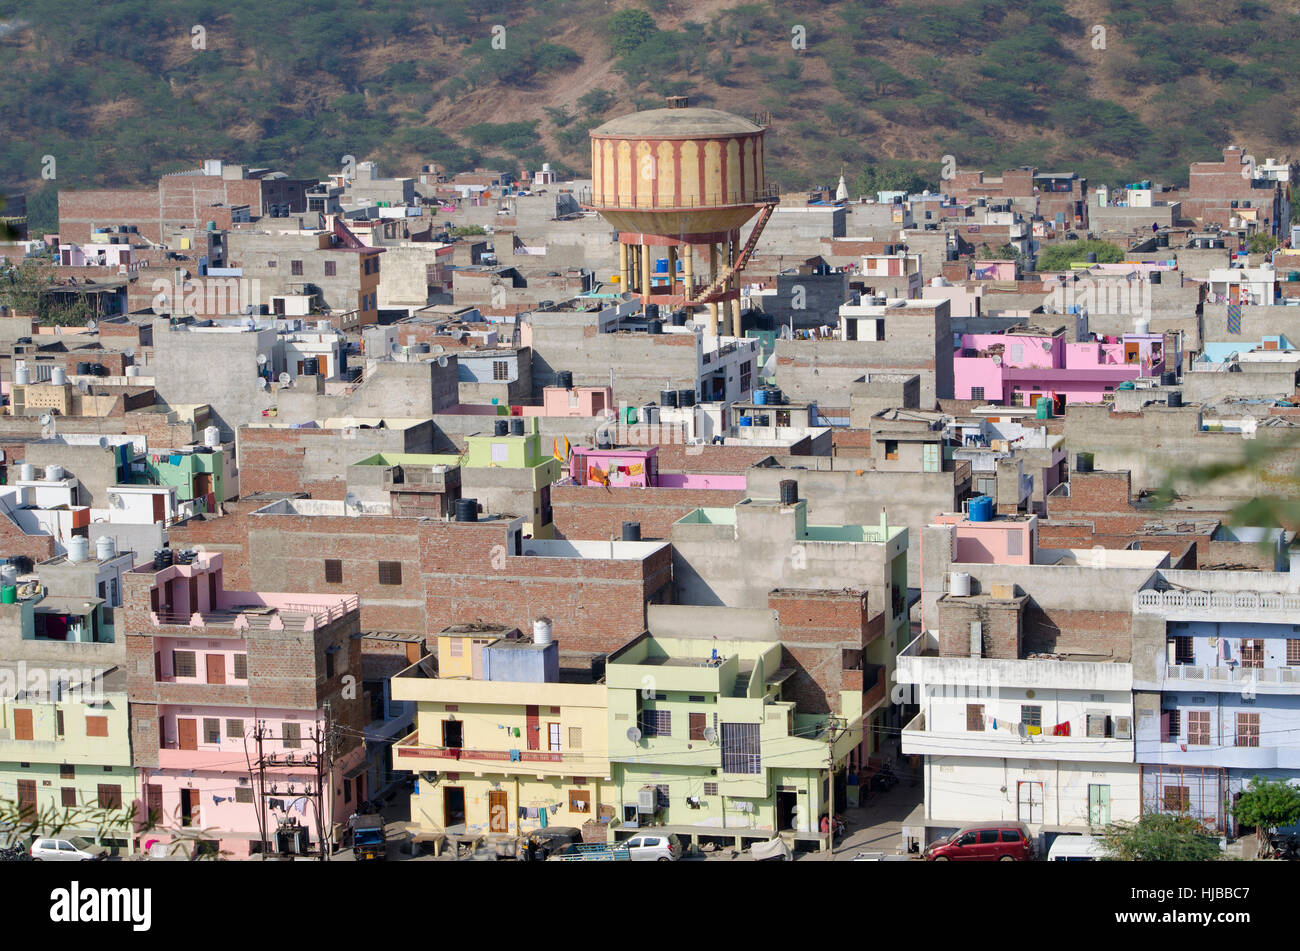 Città di Jaipur vista dall'altezza, città, Jaipur, dal di sopra, case, palazzi, architettura, costruzioni, persone, automobili Foto Stock